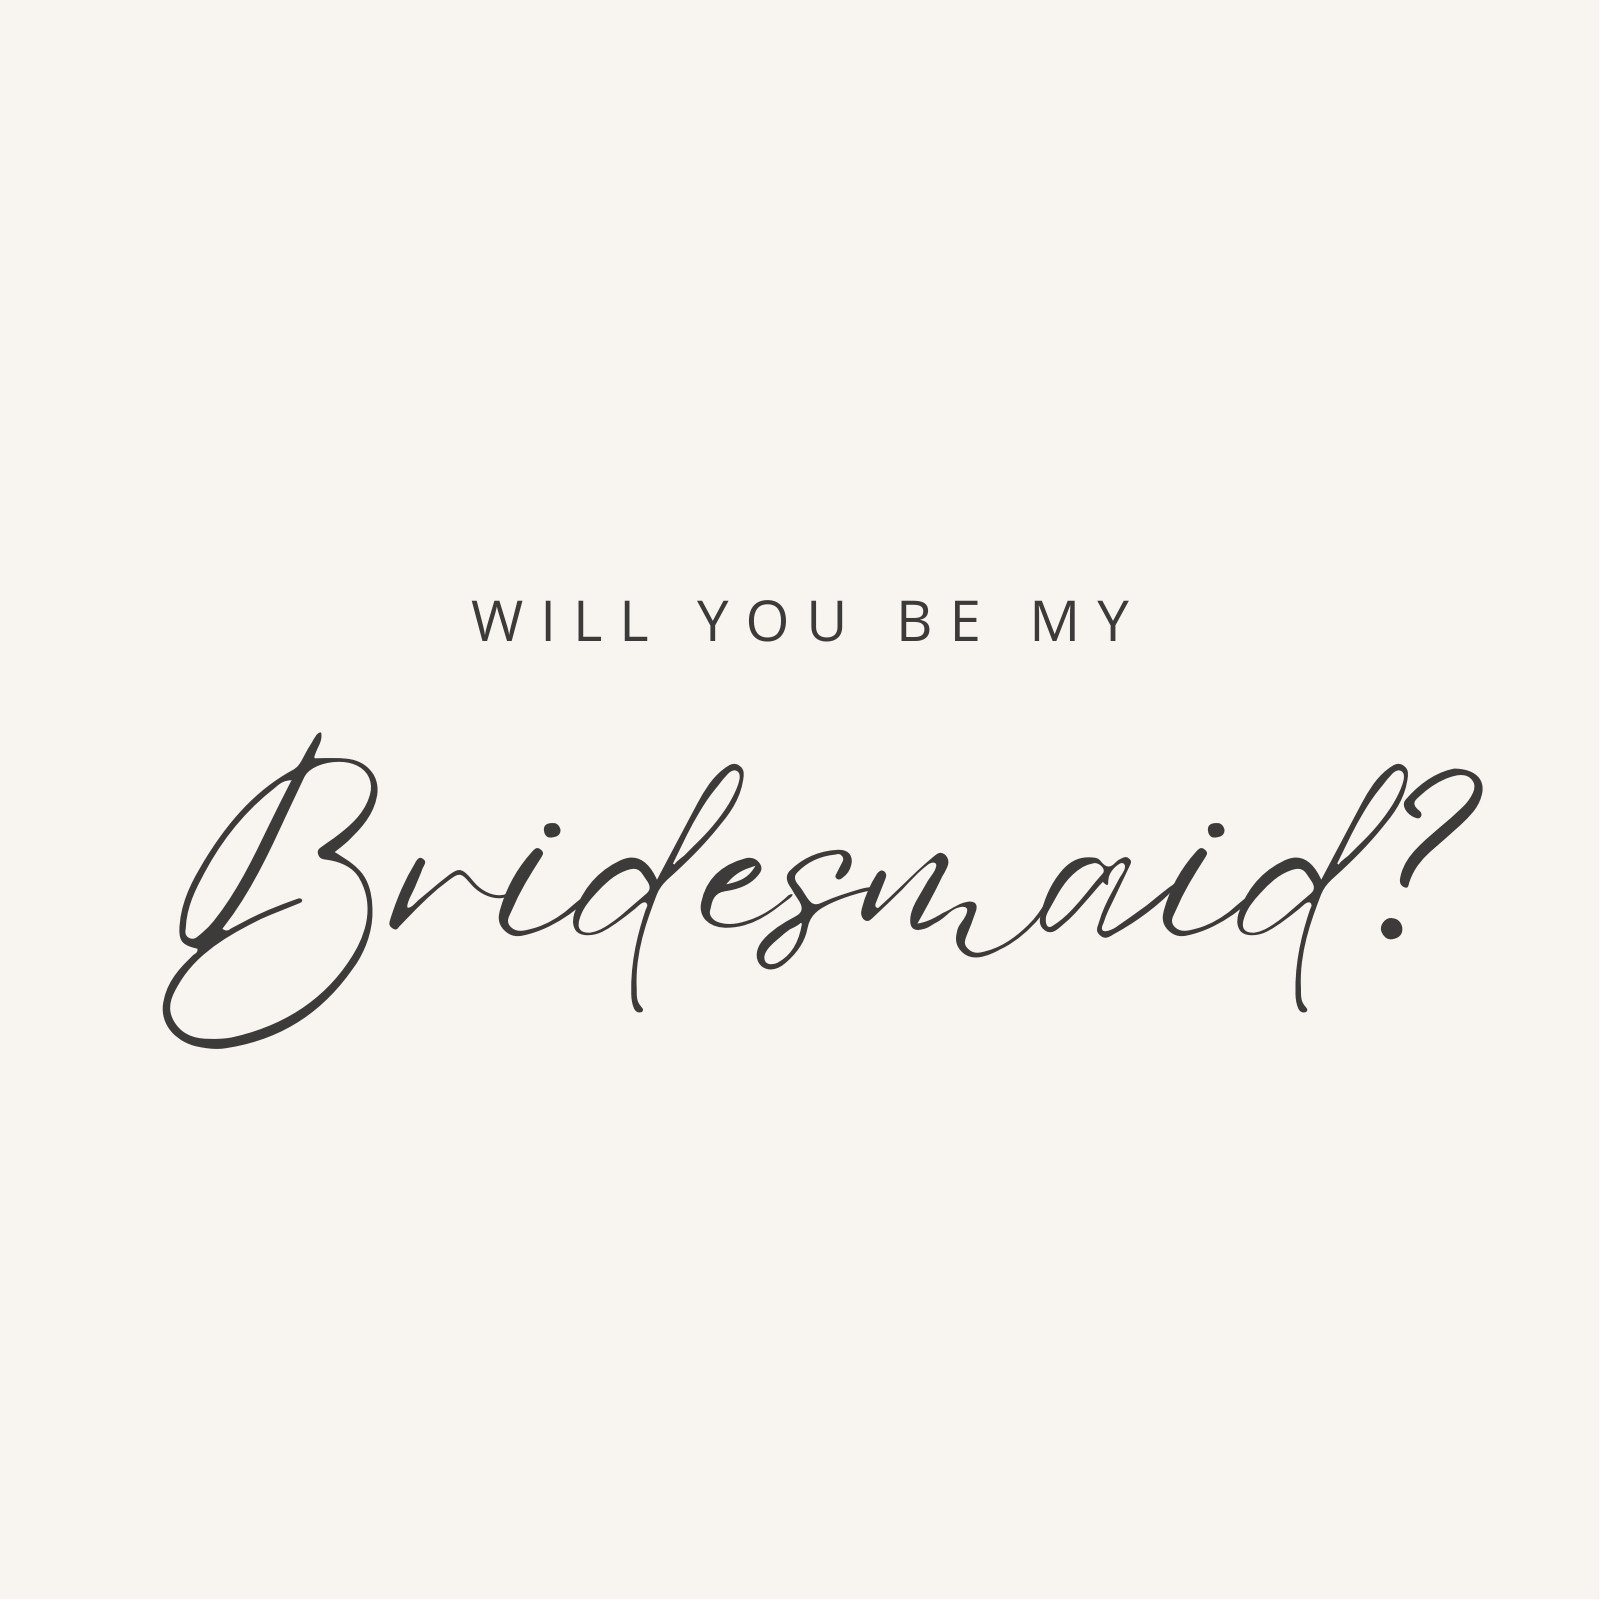 bridesmaid card ideas